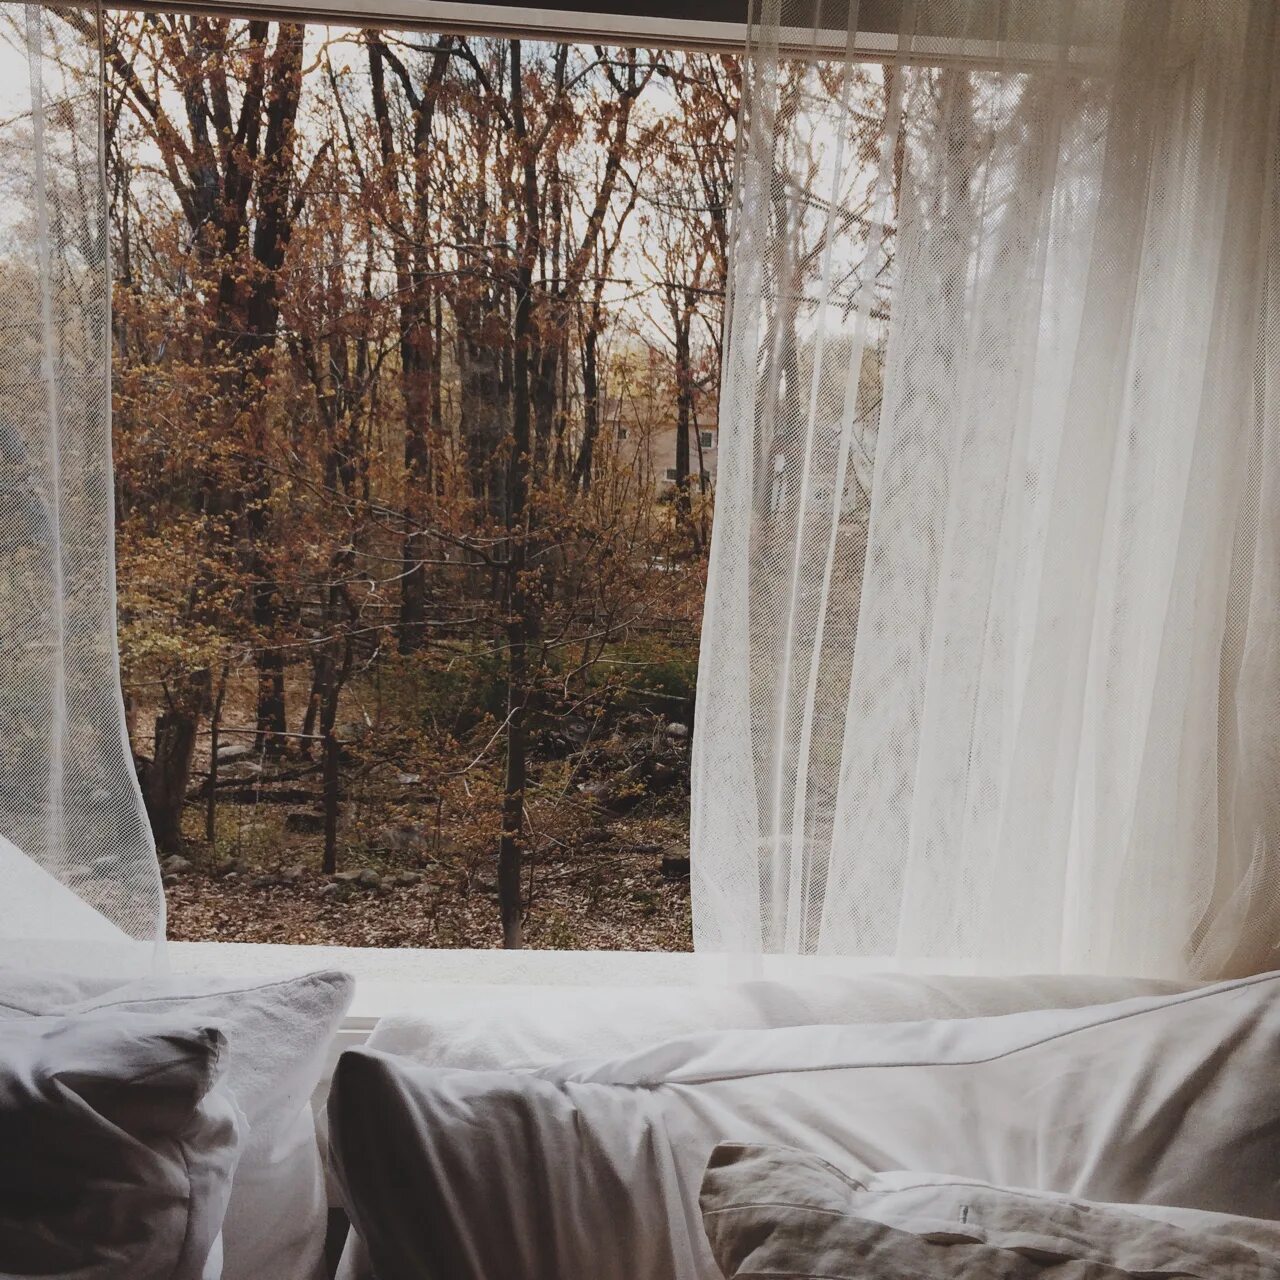 Сон в доме на улице. Вид из окна поздняя осень. Поздняя осень Эстетика. Окно Эстетика утро. Эстетика вид из окна на лес.